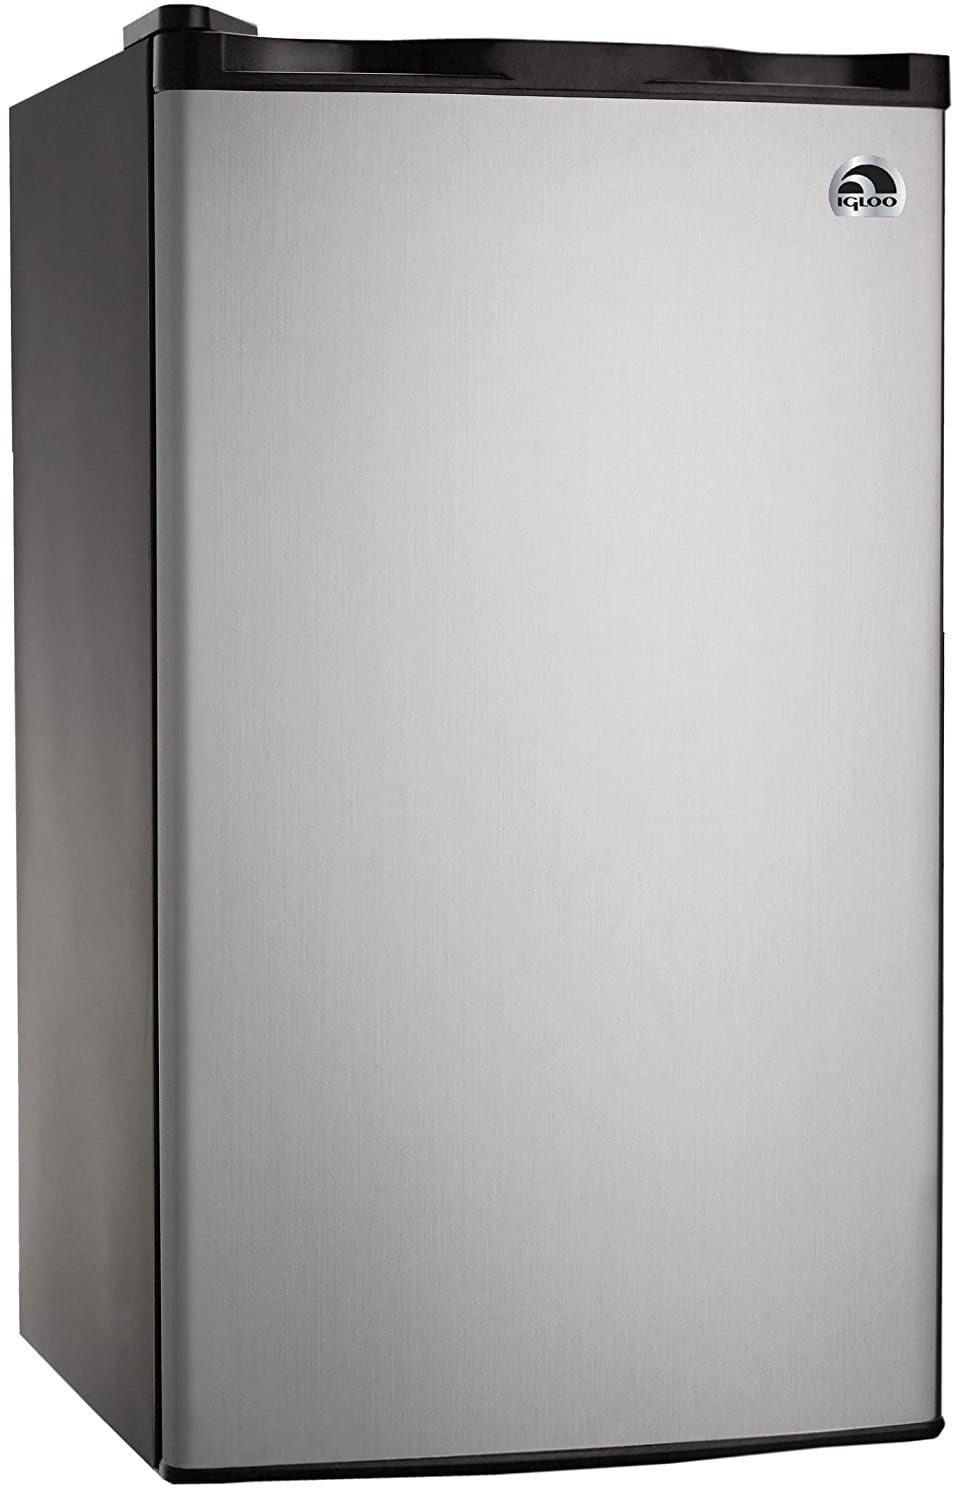 Best Mini Compact Refrigerators 2017: Small RCA Igloo Stainless Steel Fridge 2018